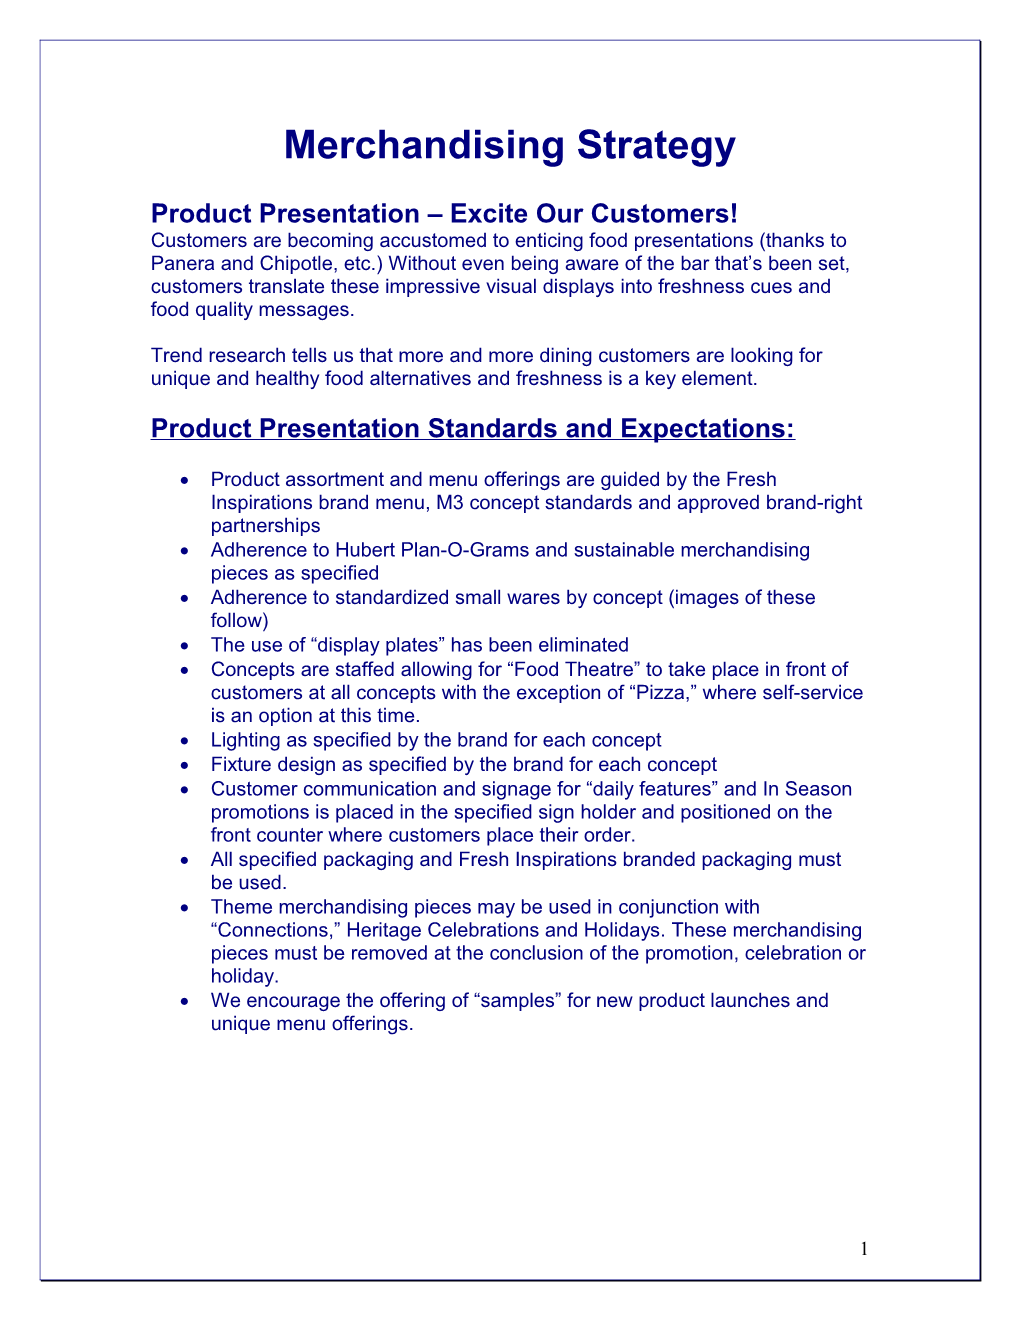 FI Brand & Marketing Standards Manual